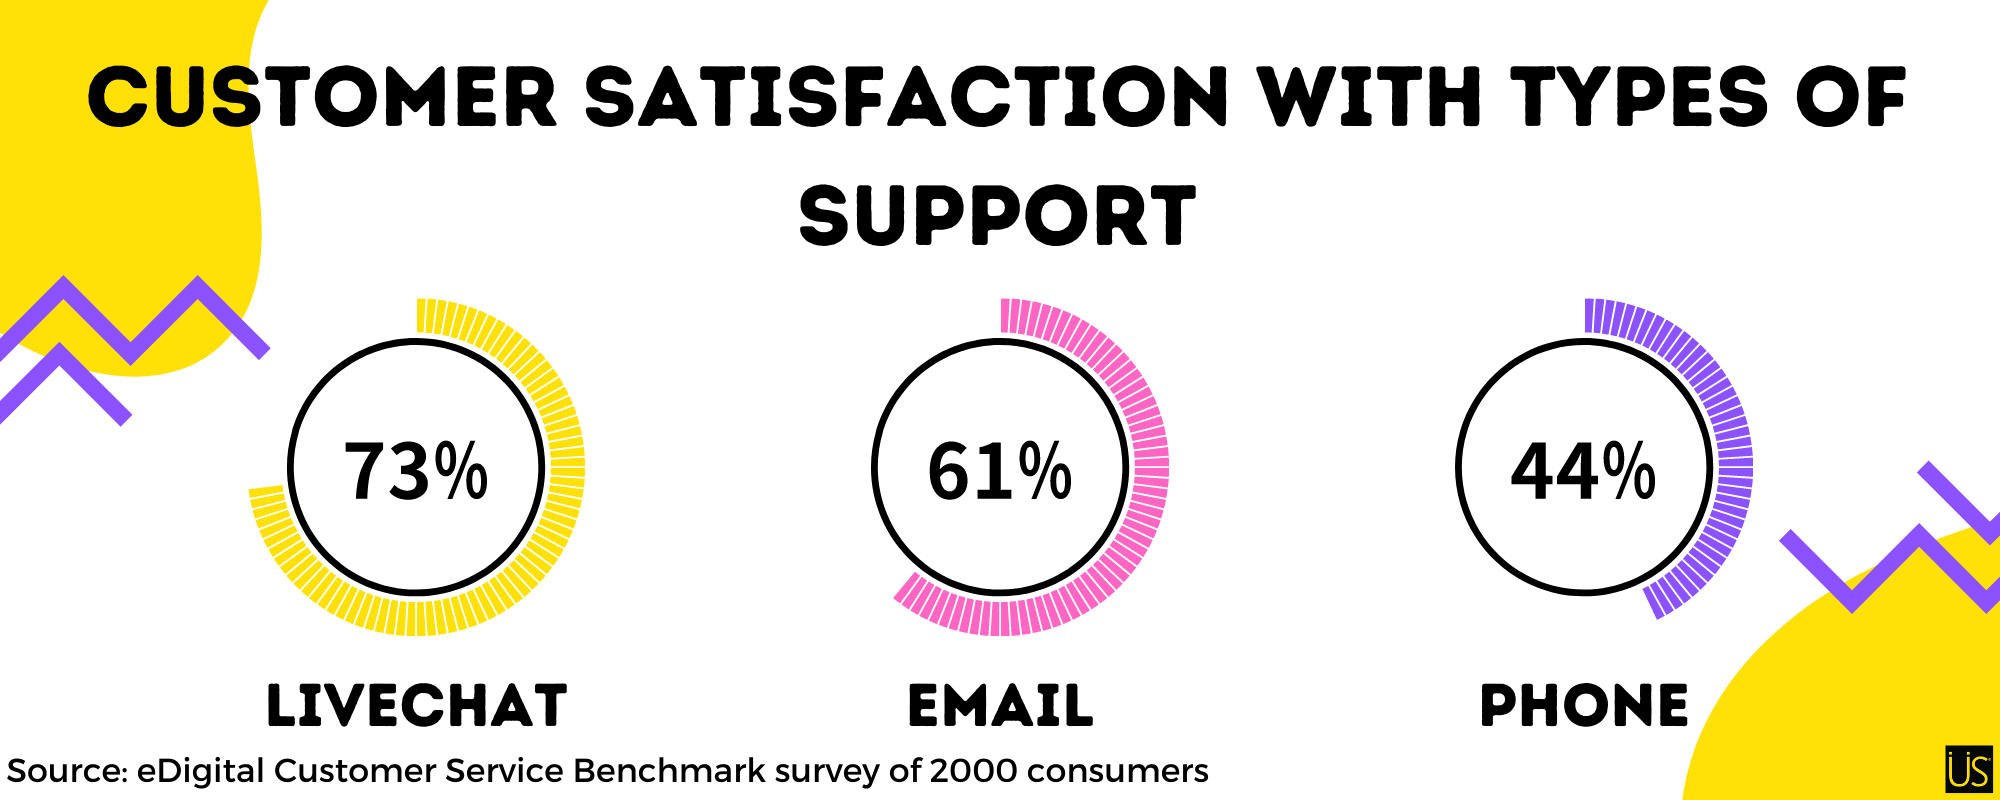 Statistics for customer support